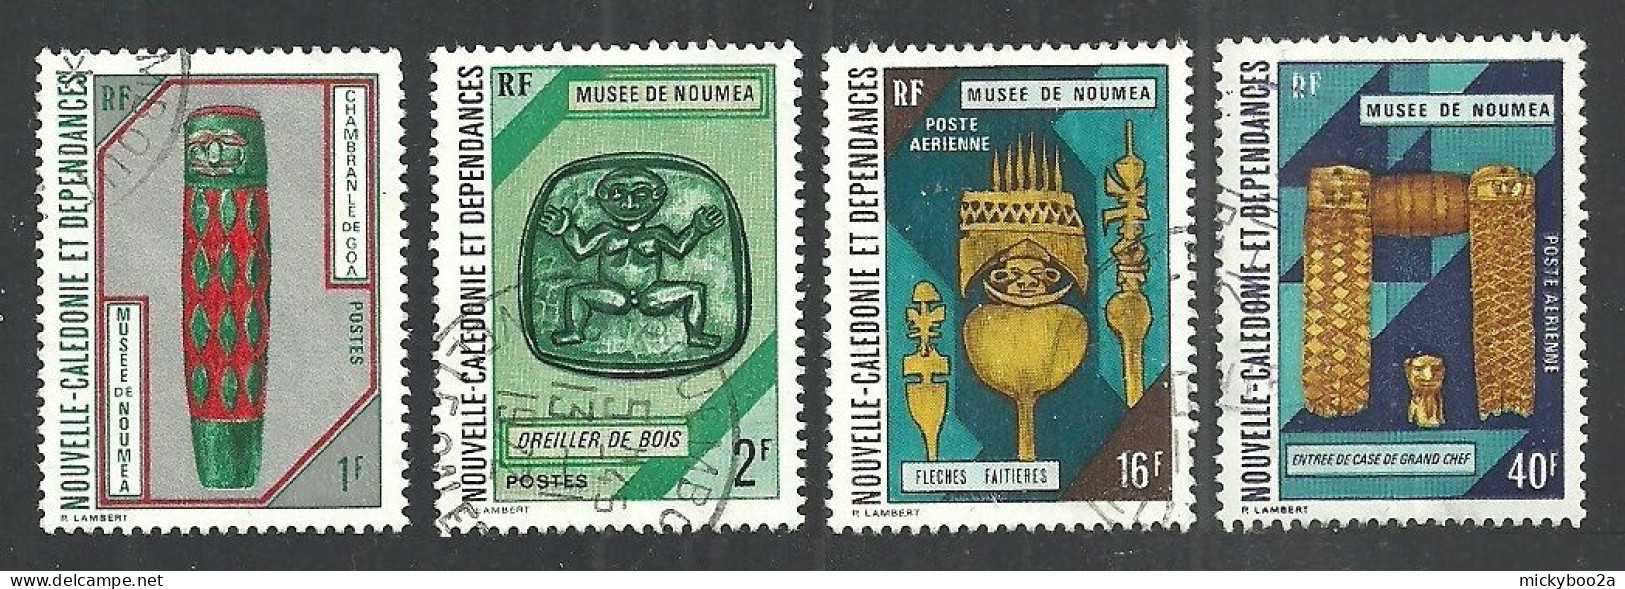 NEW CALEDONIA 1972 NOUMEA MUSEUM EXHIBITS VALUES USED - Usati